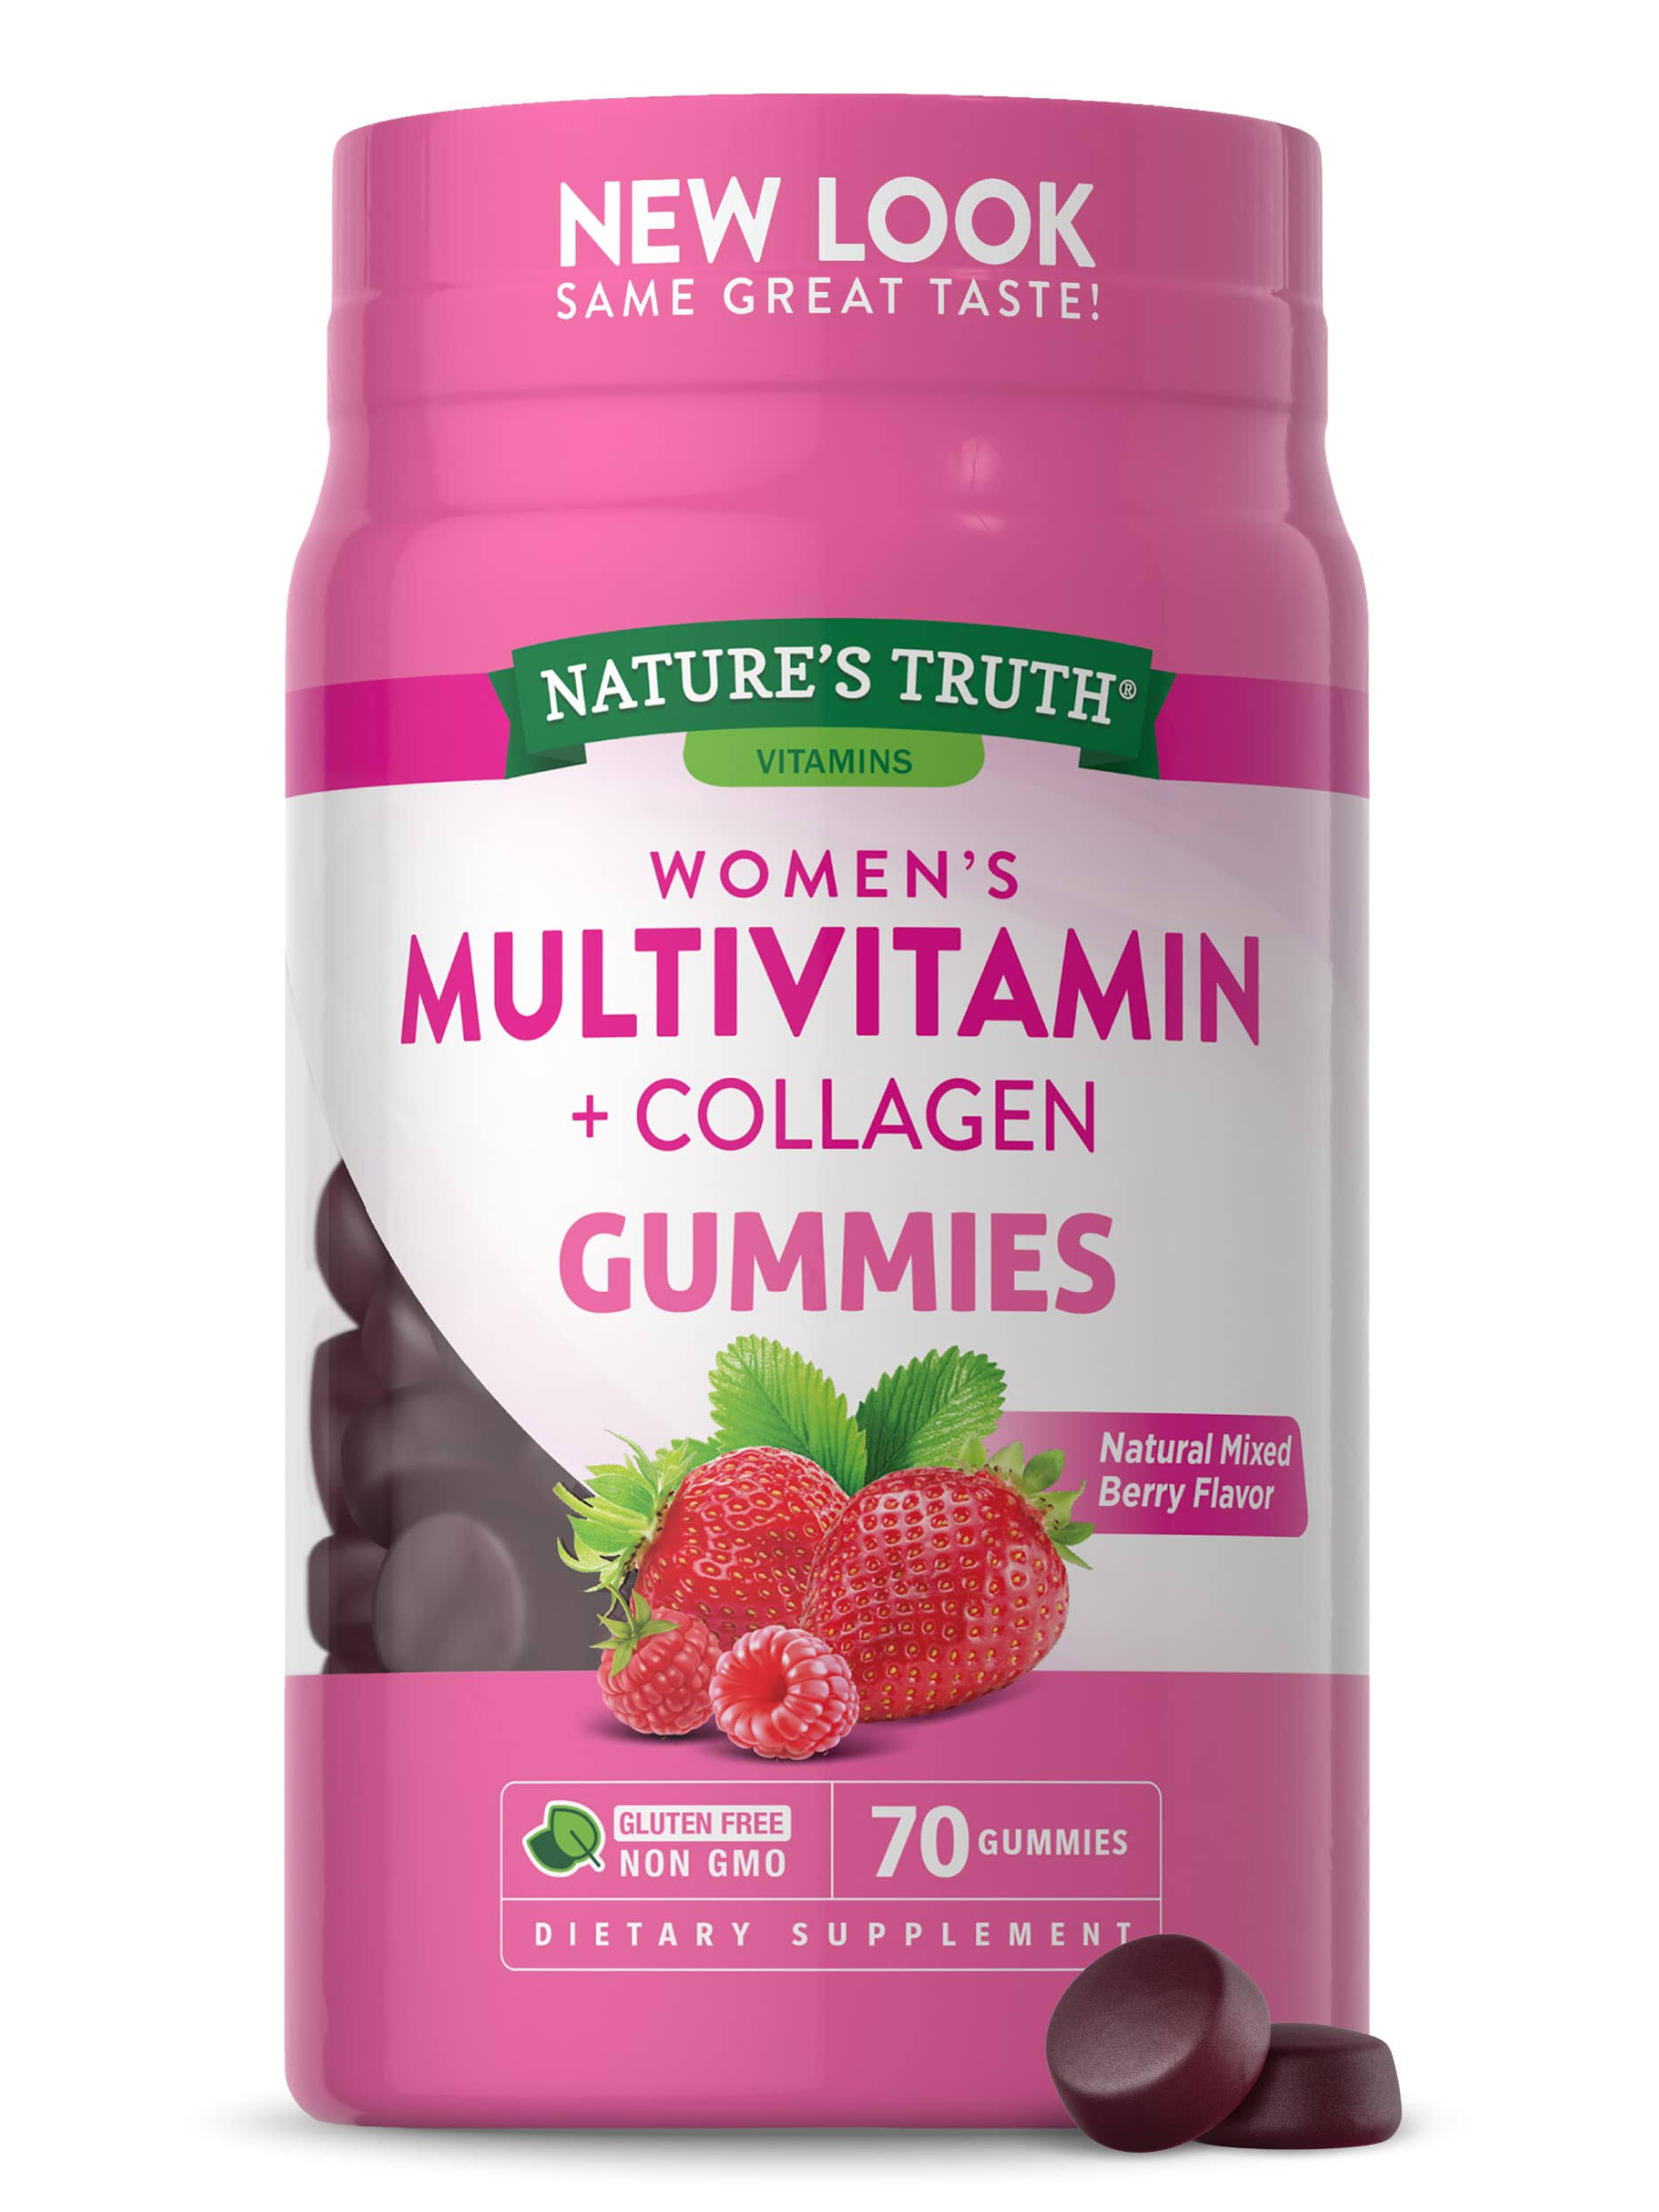 Nature's Truth Multivitamin + Collagen, Women's, Gummies, Natural Mixed Berry Flavor - 70 gummies